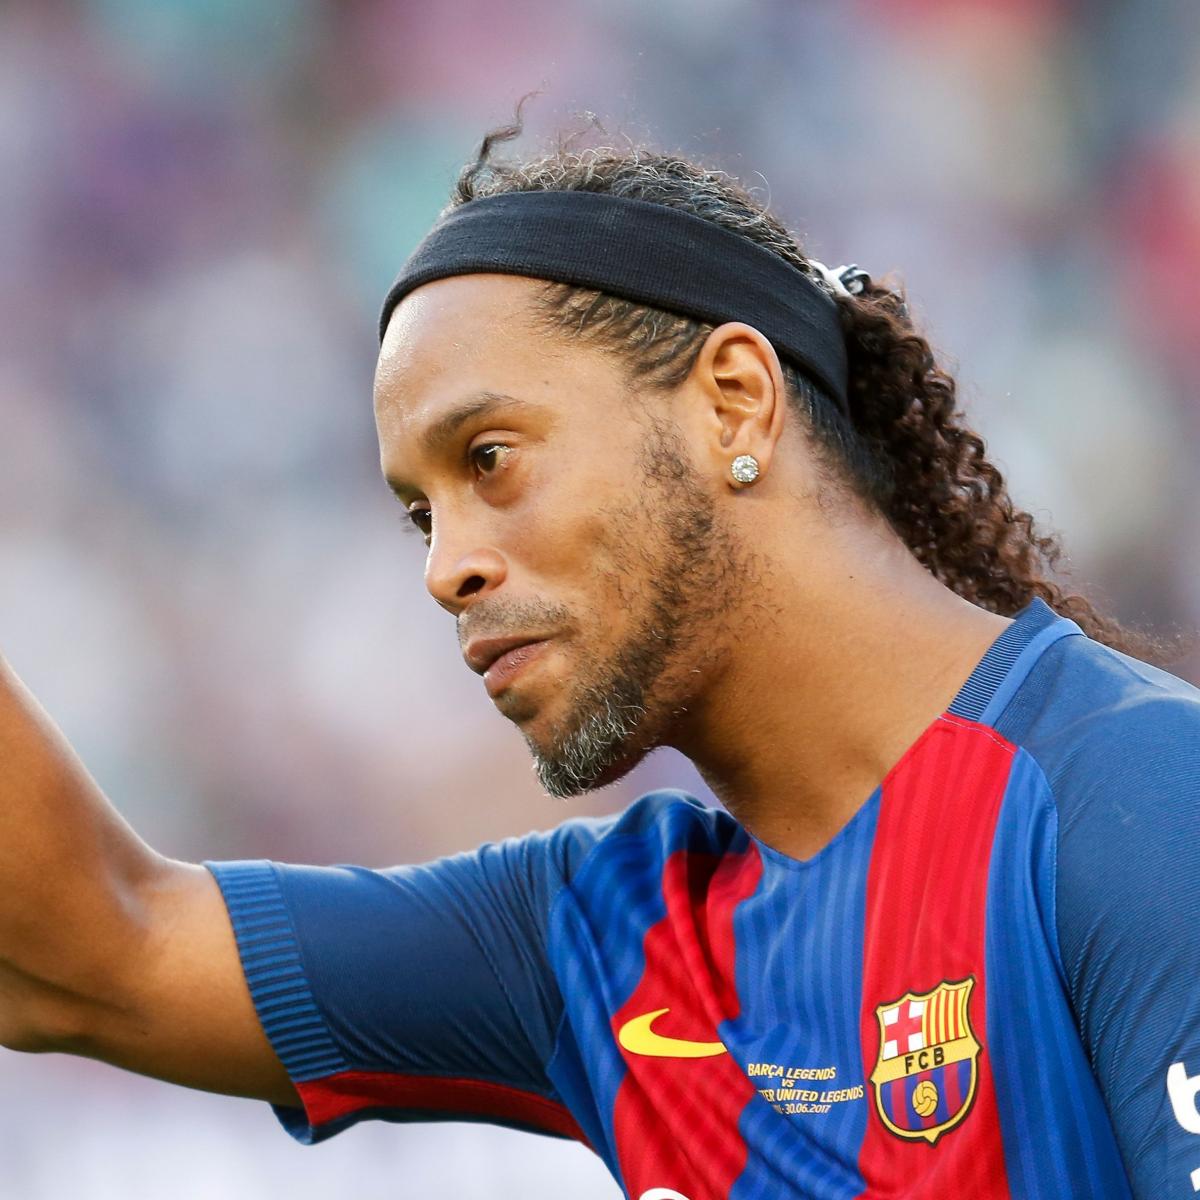 Ronaldinho Added To ICON Lineup In FIFA 18 - HRK Newsroom